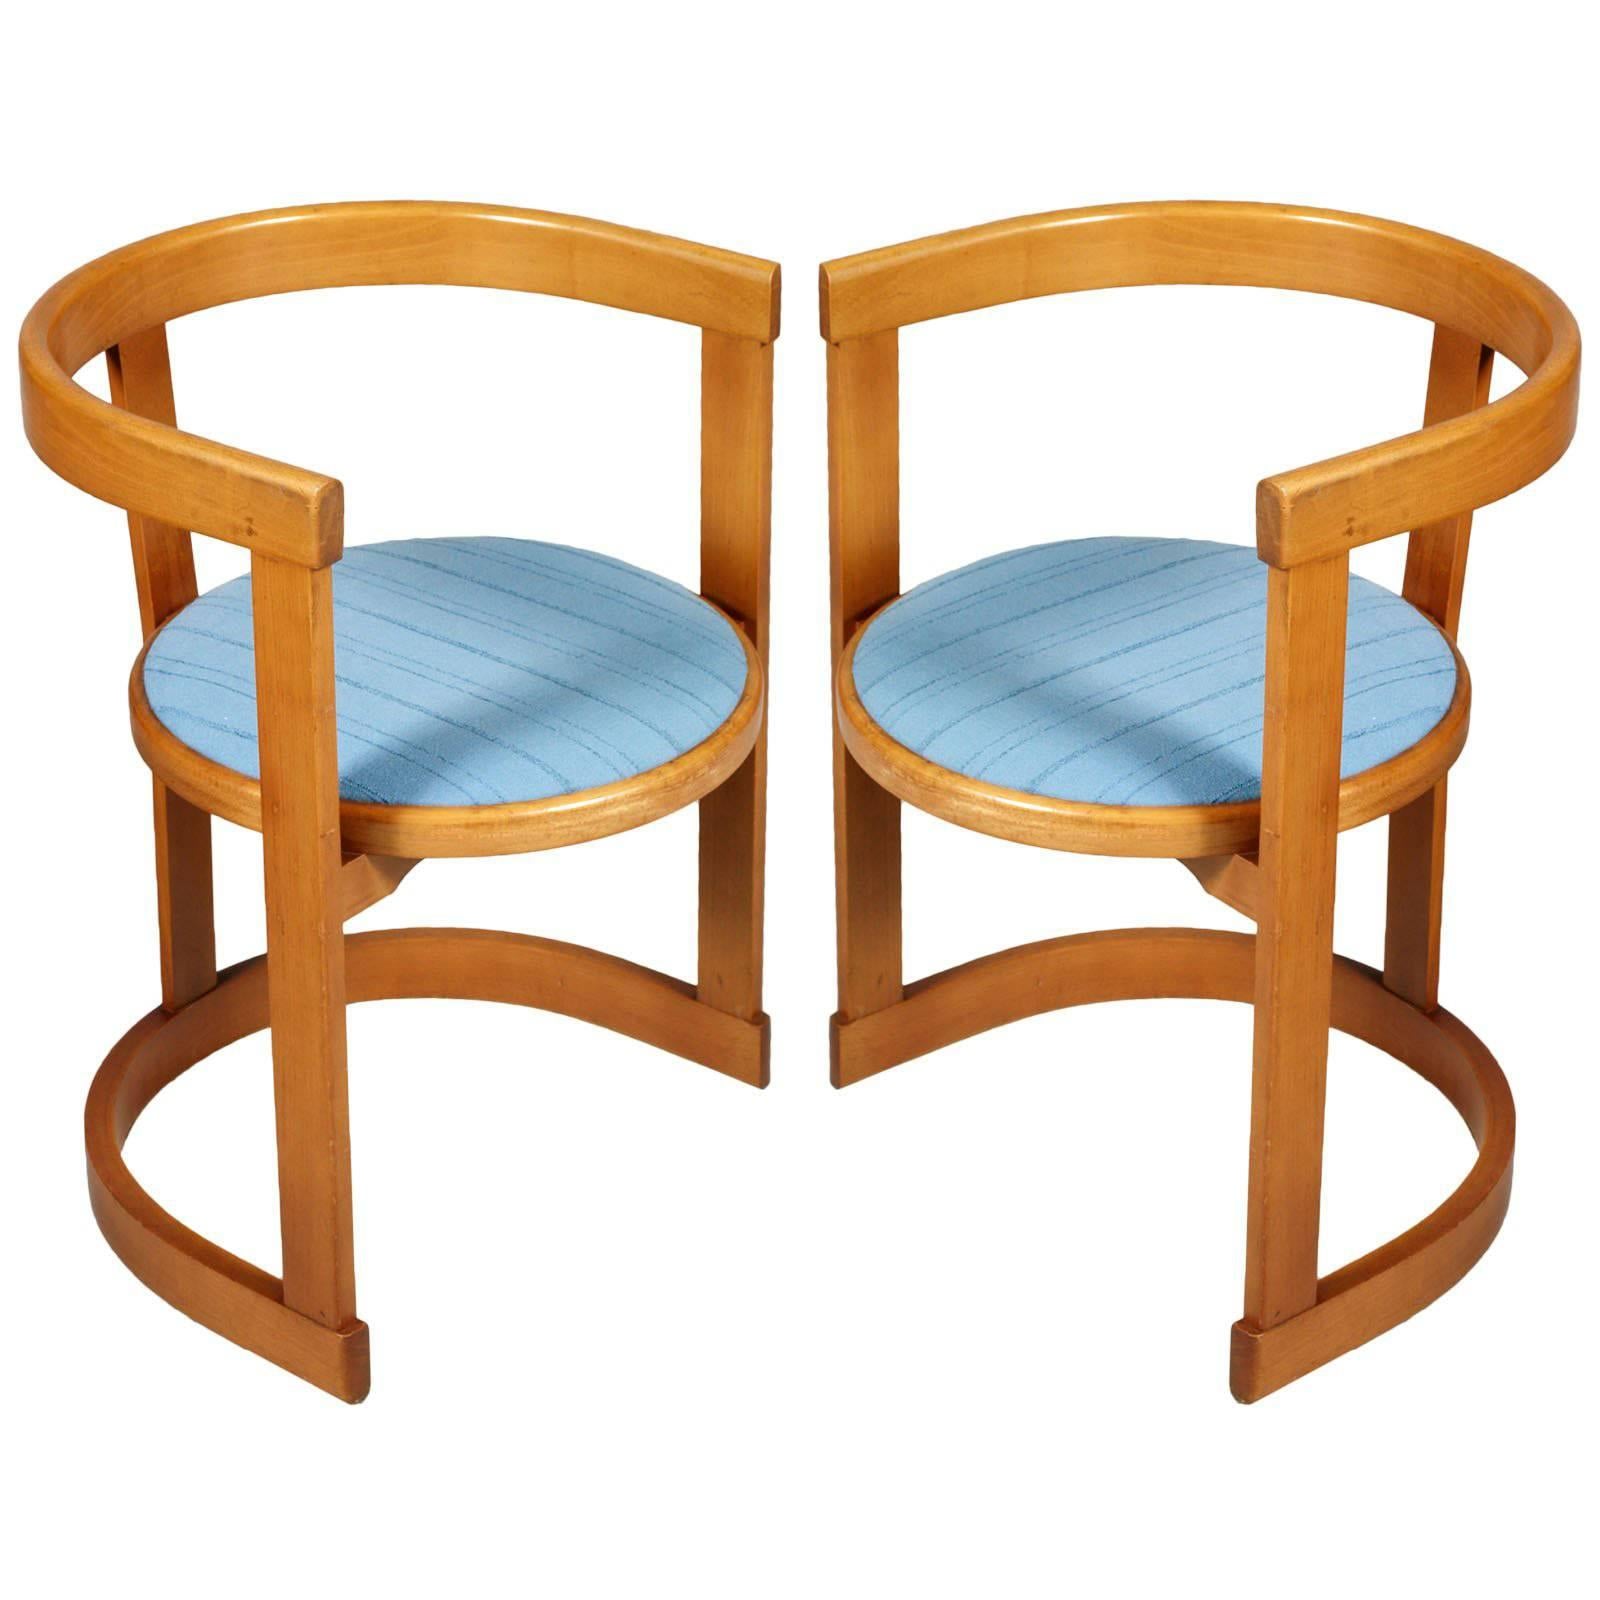 Italian Mid-Century Modern Pair Frank Lloyd Wright Style Barrel Armchairs